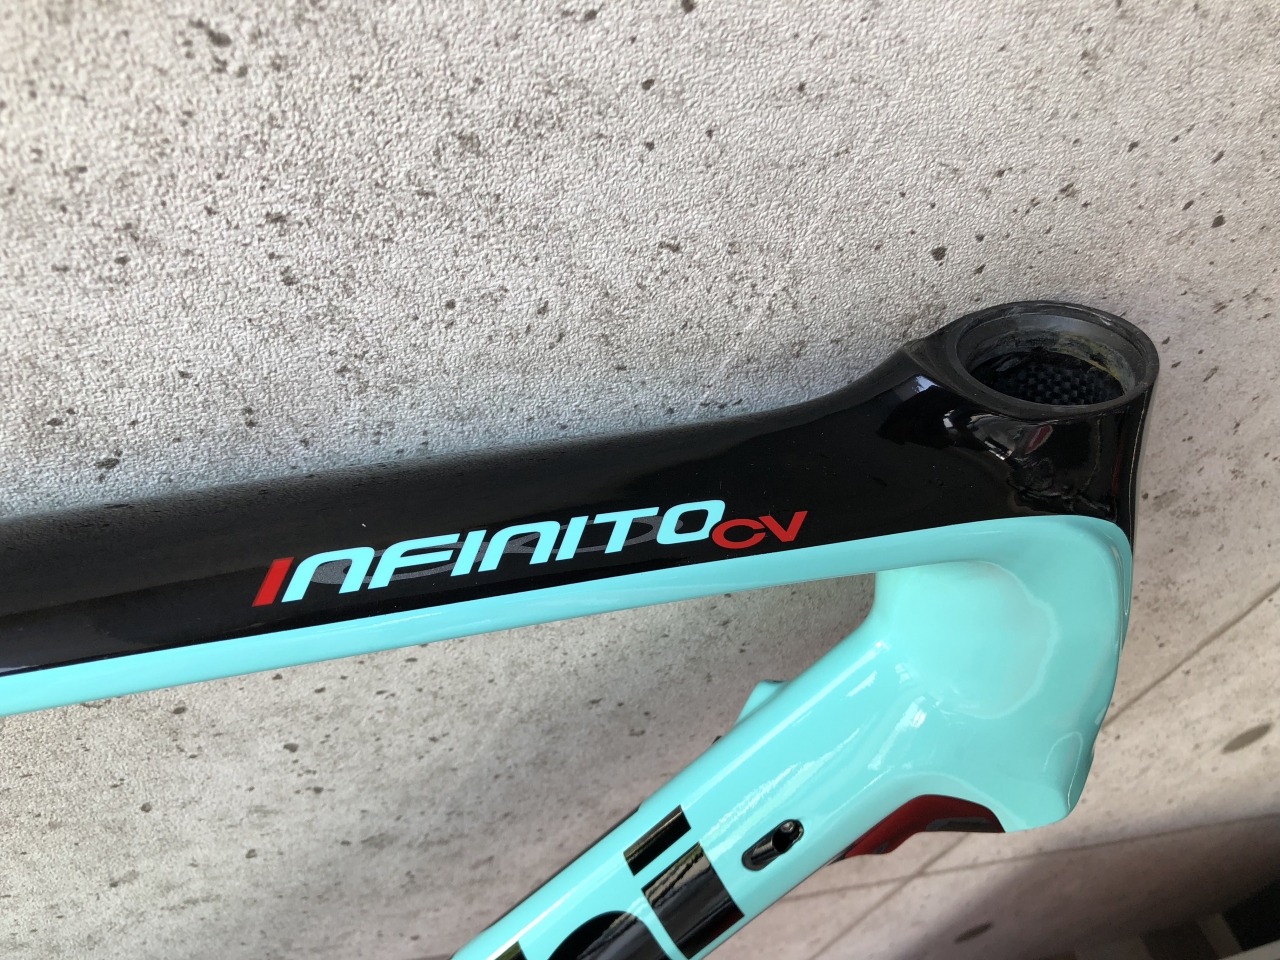 Bianchi INFINITO CV Disc フレームセット 入荷！ - Climb cycle sports